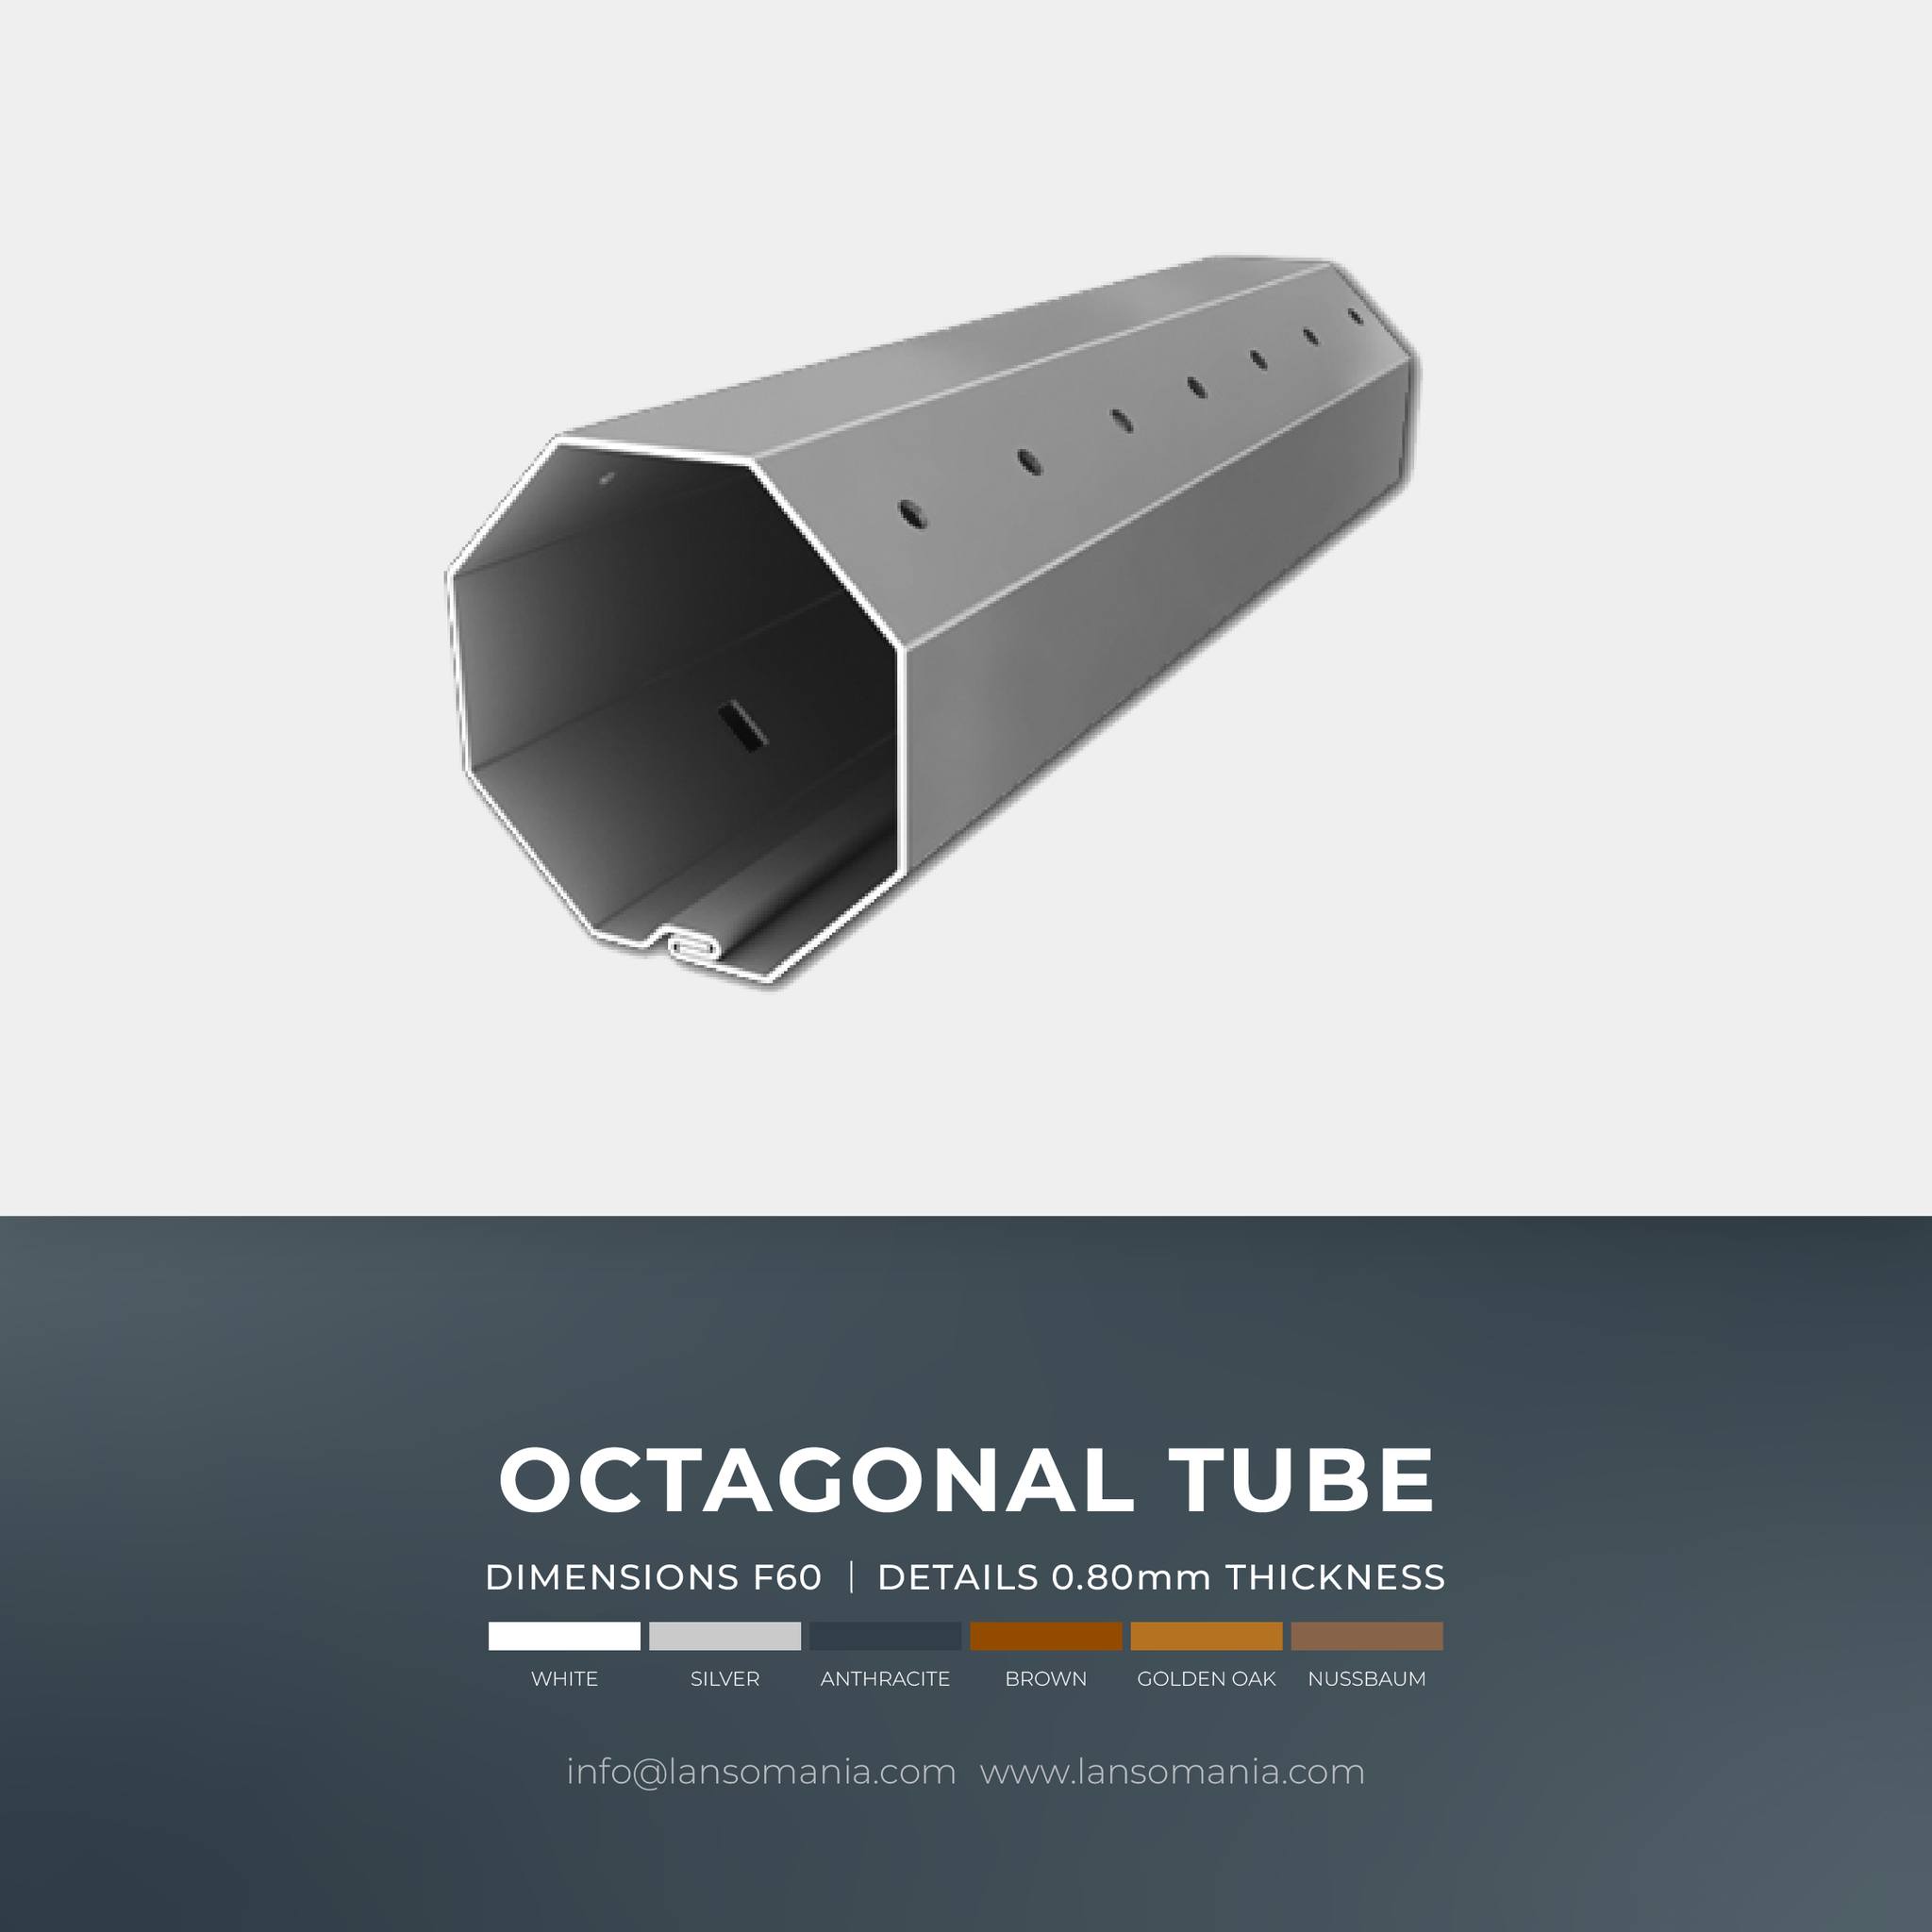 Octagonal tube F60